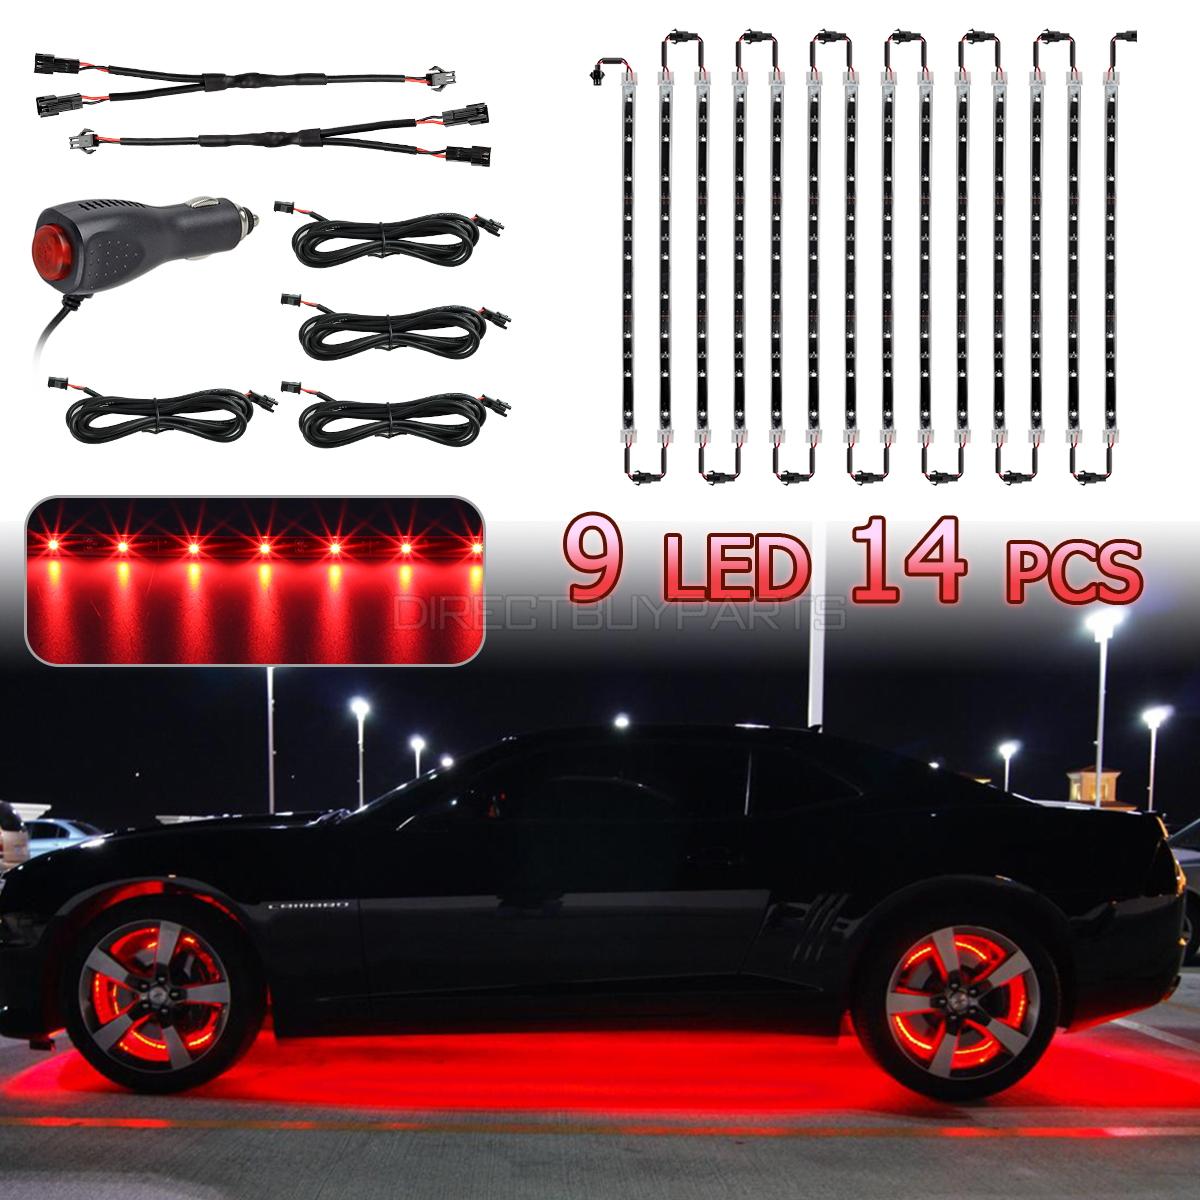 Details About Set 14 Tubes Red Car Underbody Under Glow Led Light Strip 9 3528 Smd Lighting